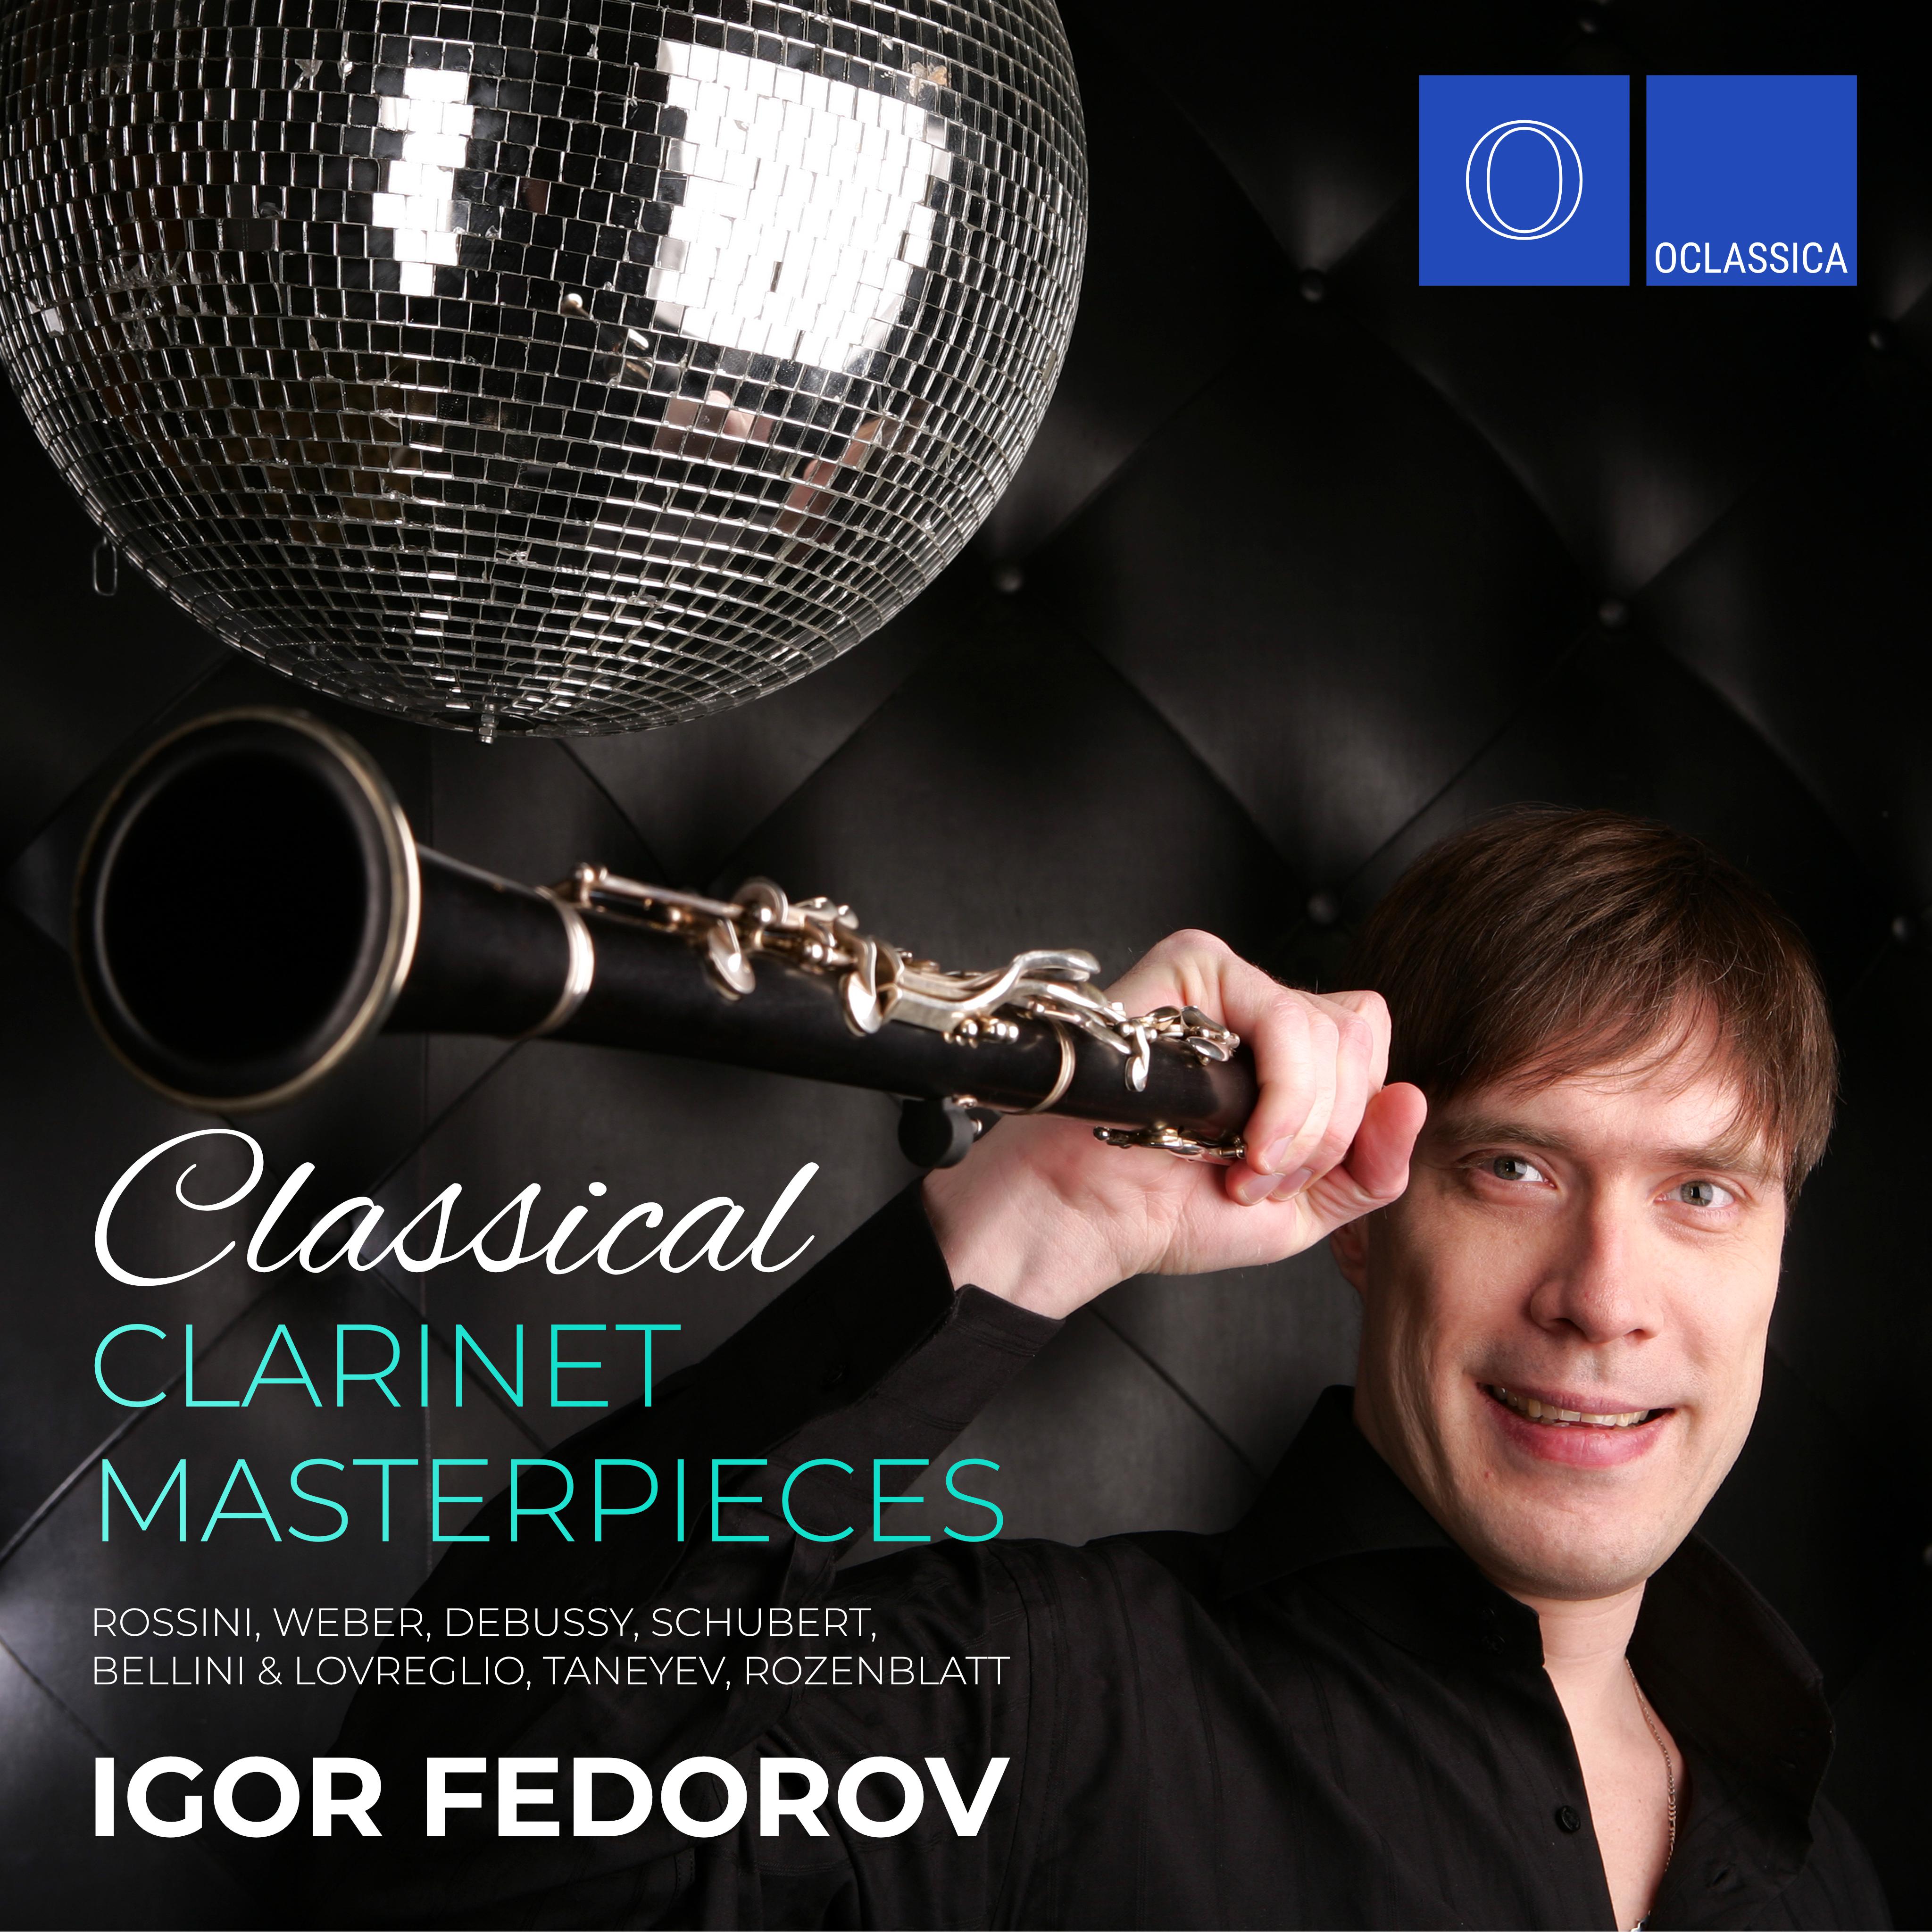 Rossini, Weber, Debussy, Schubert, Bellini & Lovreglio, Taneyev, Rozenblatt: Classical Clarinet Masterpieces